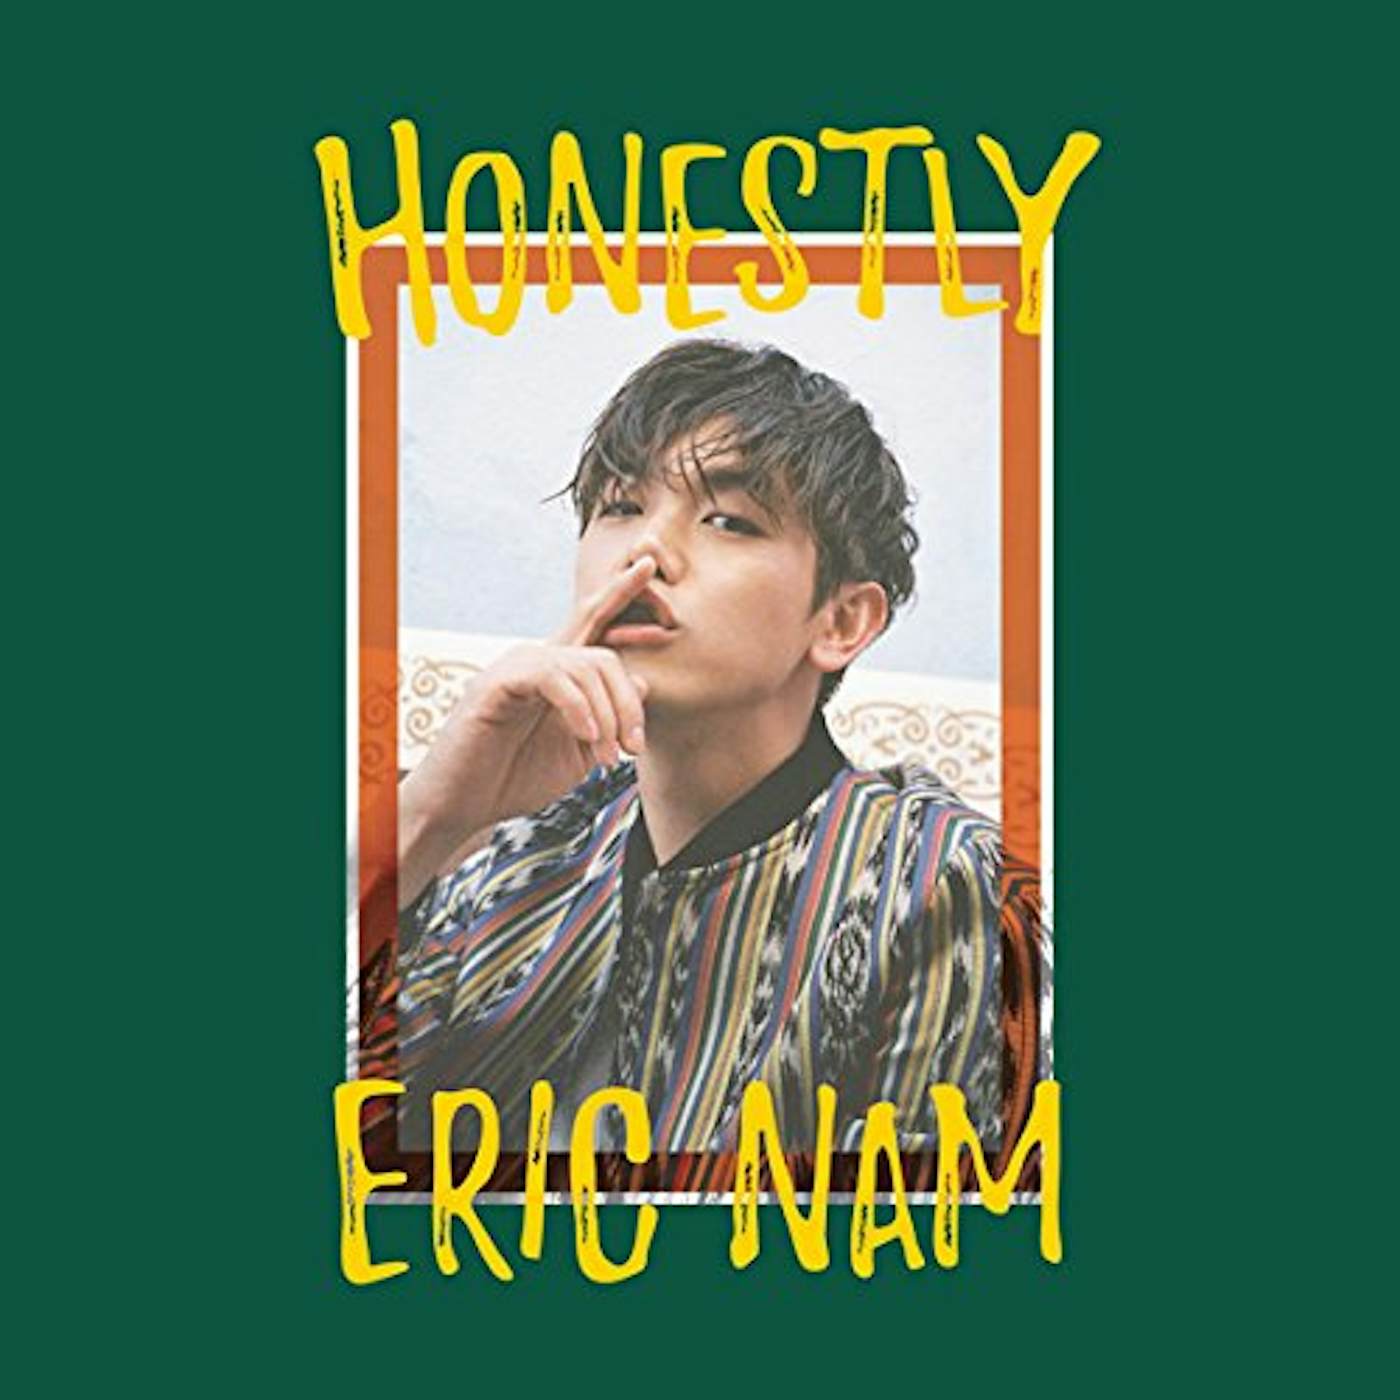 Eric Nam HONESTLY CD